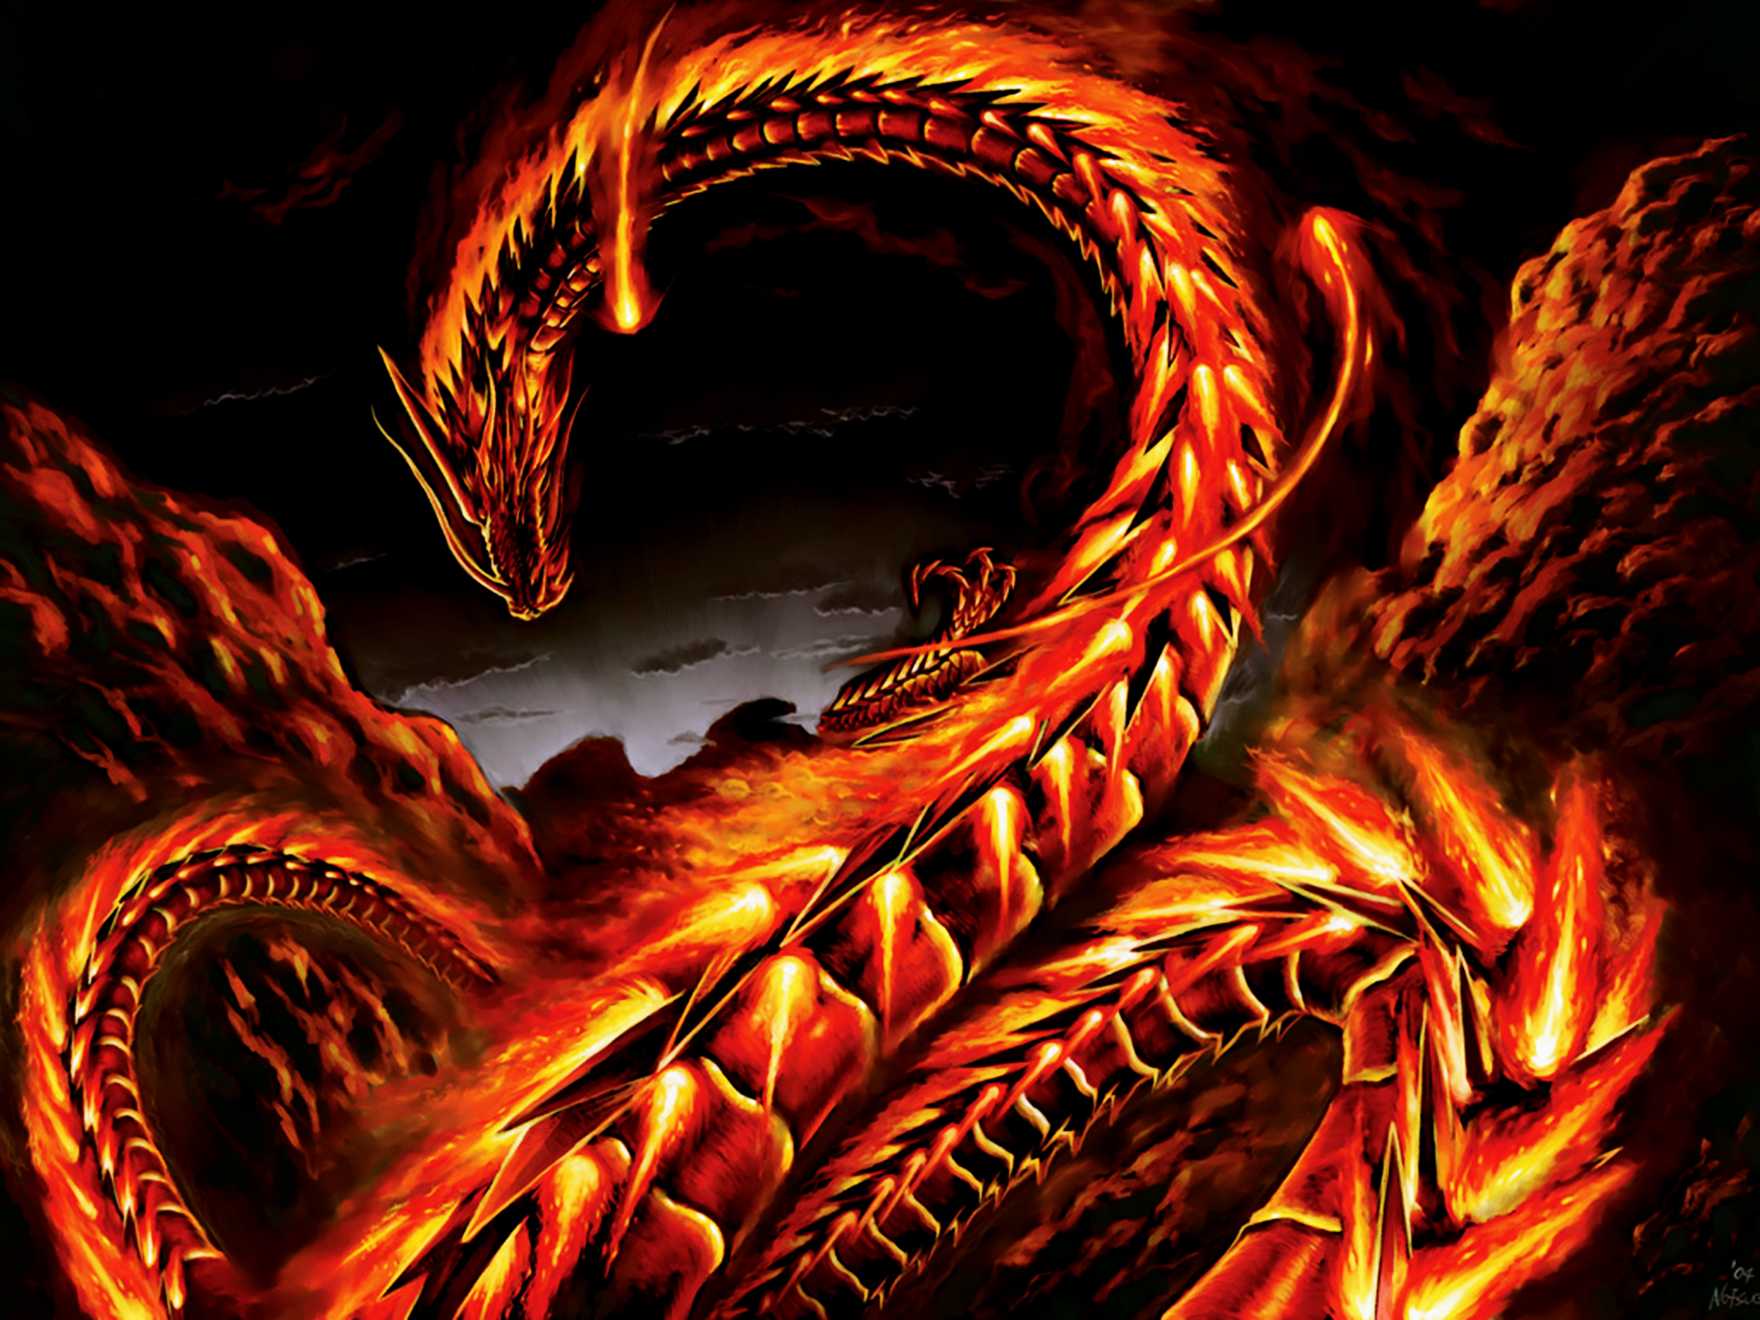 Fire Dragon Full Hd Wallpapers Wallpaper Cave